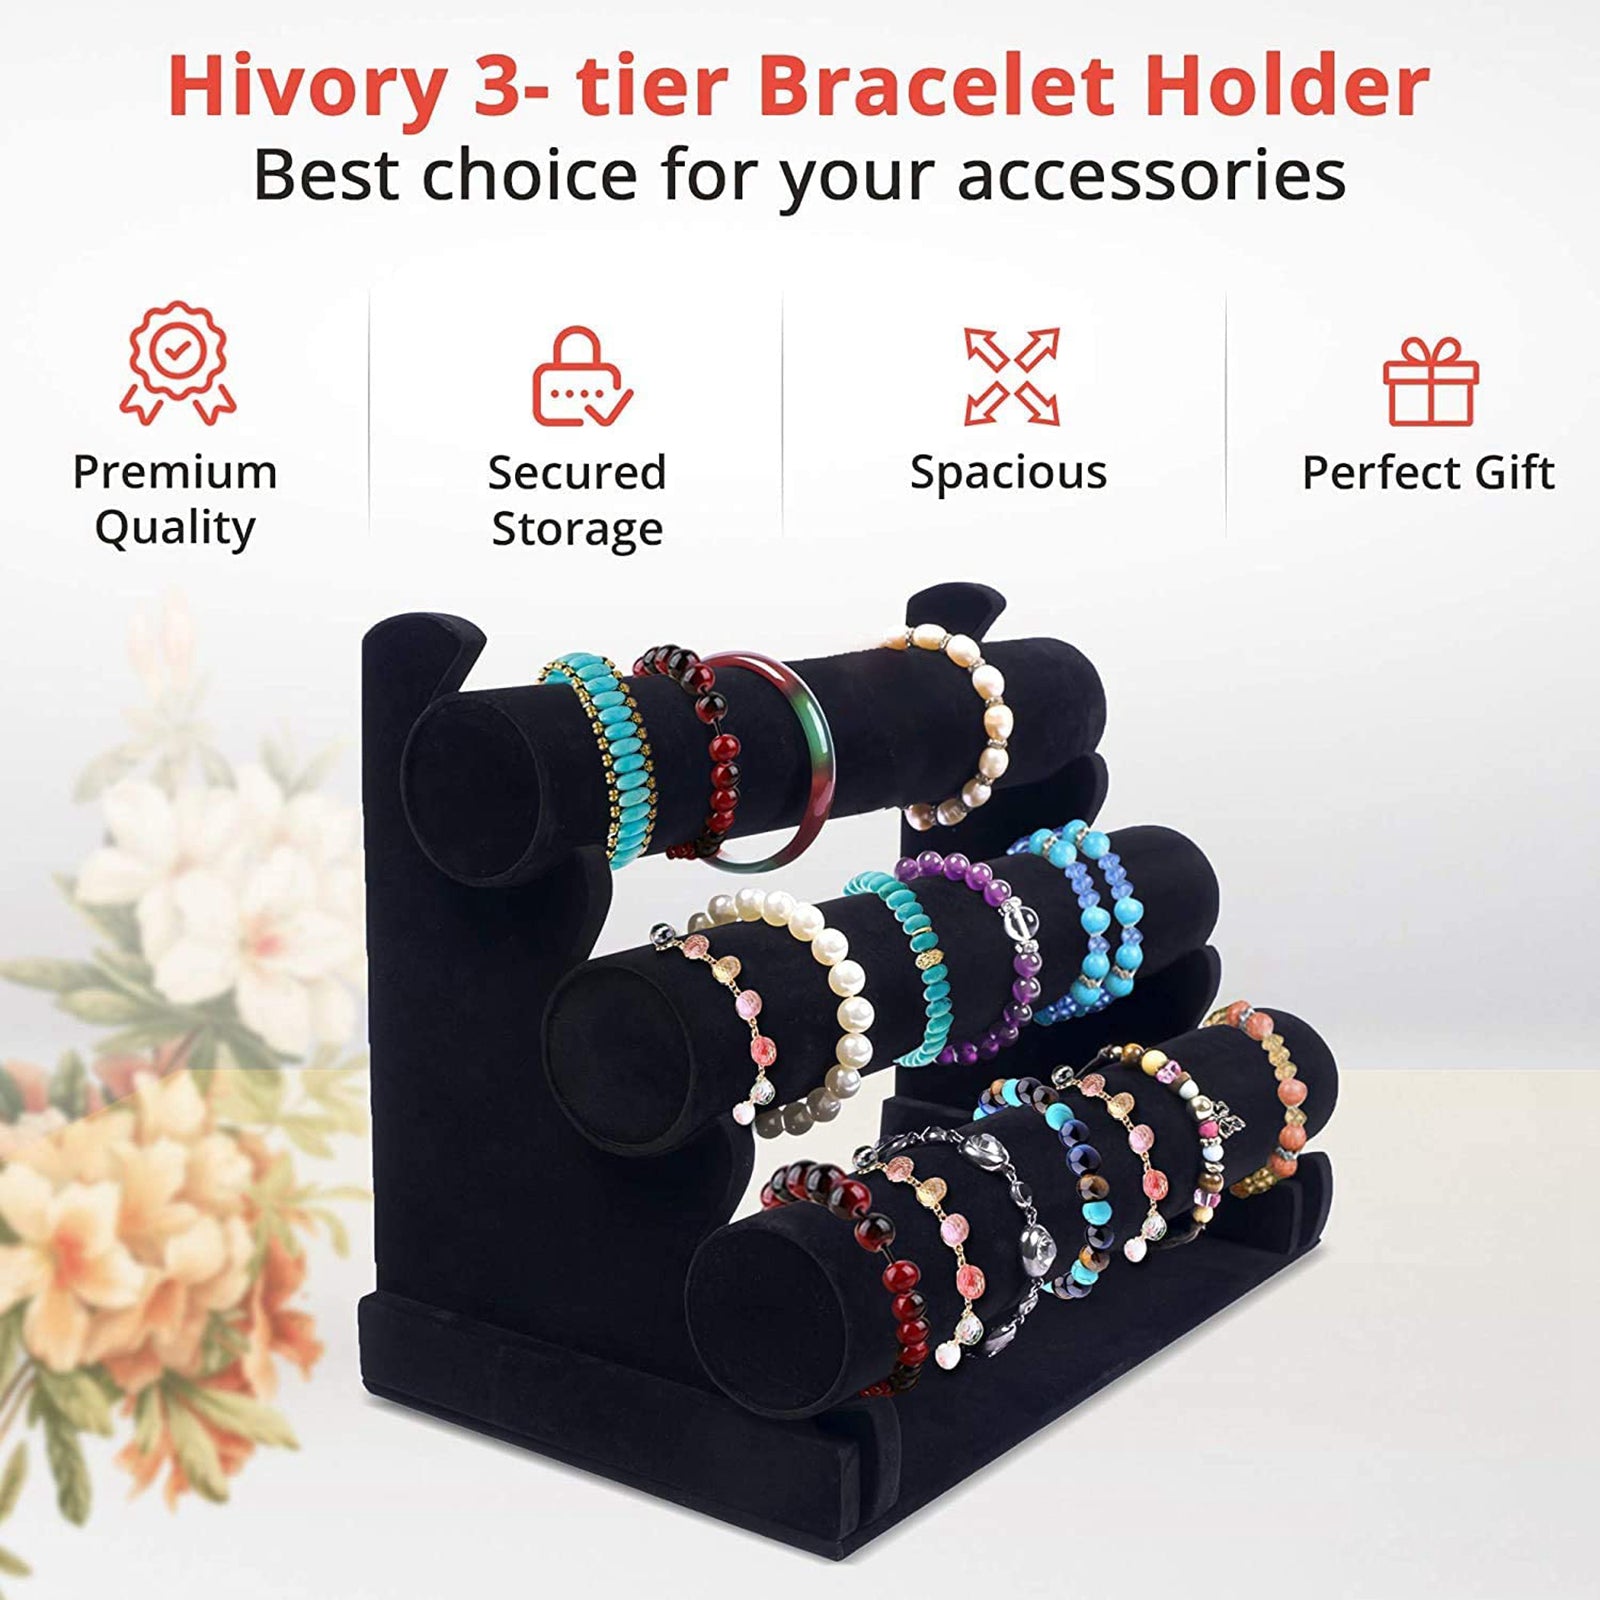 3-Tier Velvet Jewelry Bracelet Watch Display Holder Stand Organizer Black